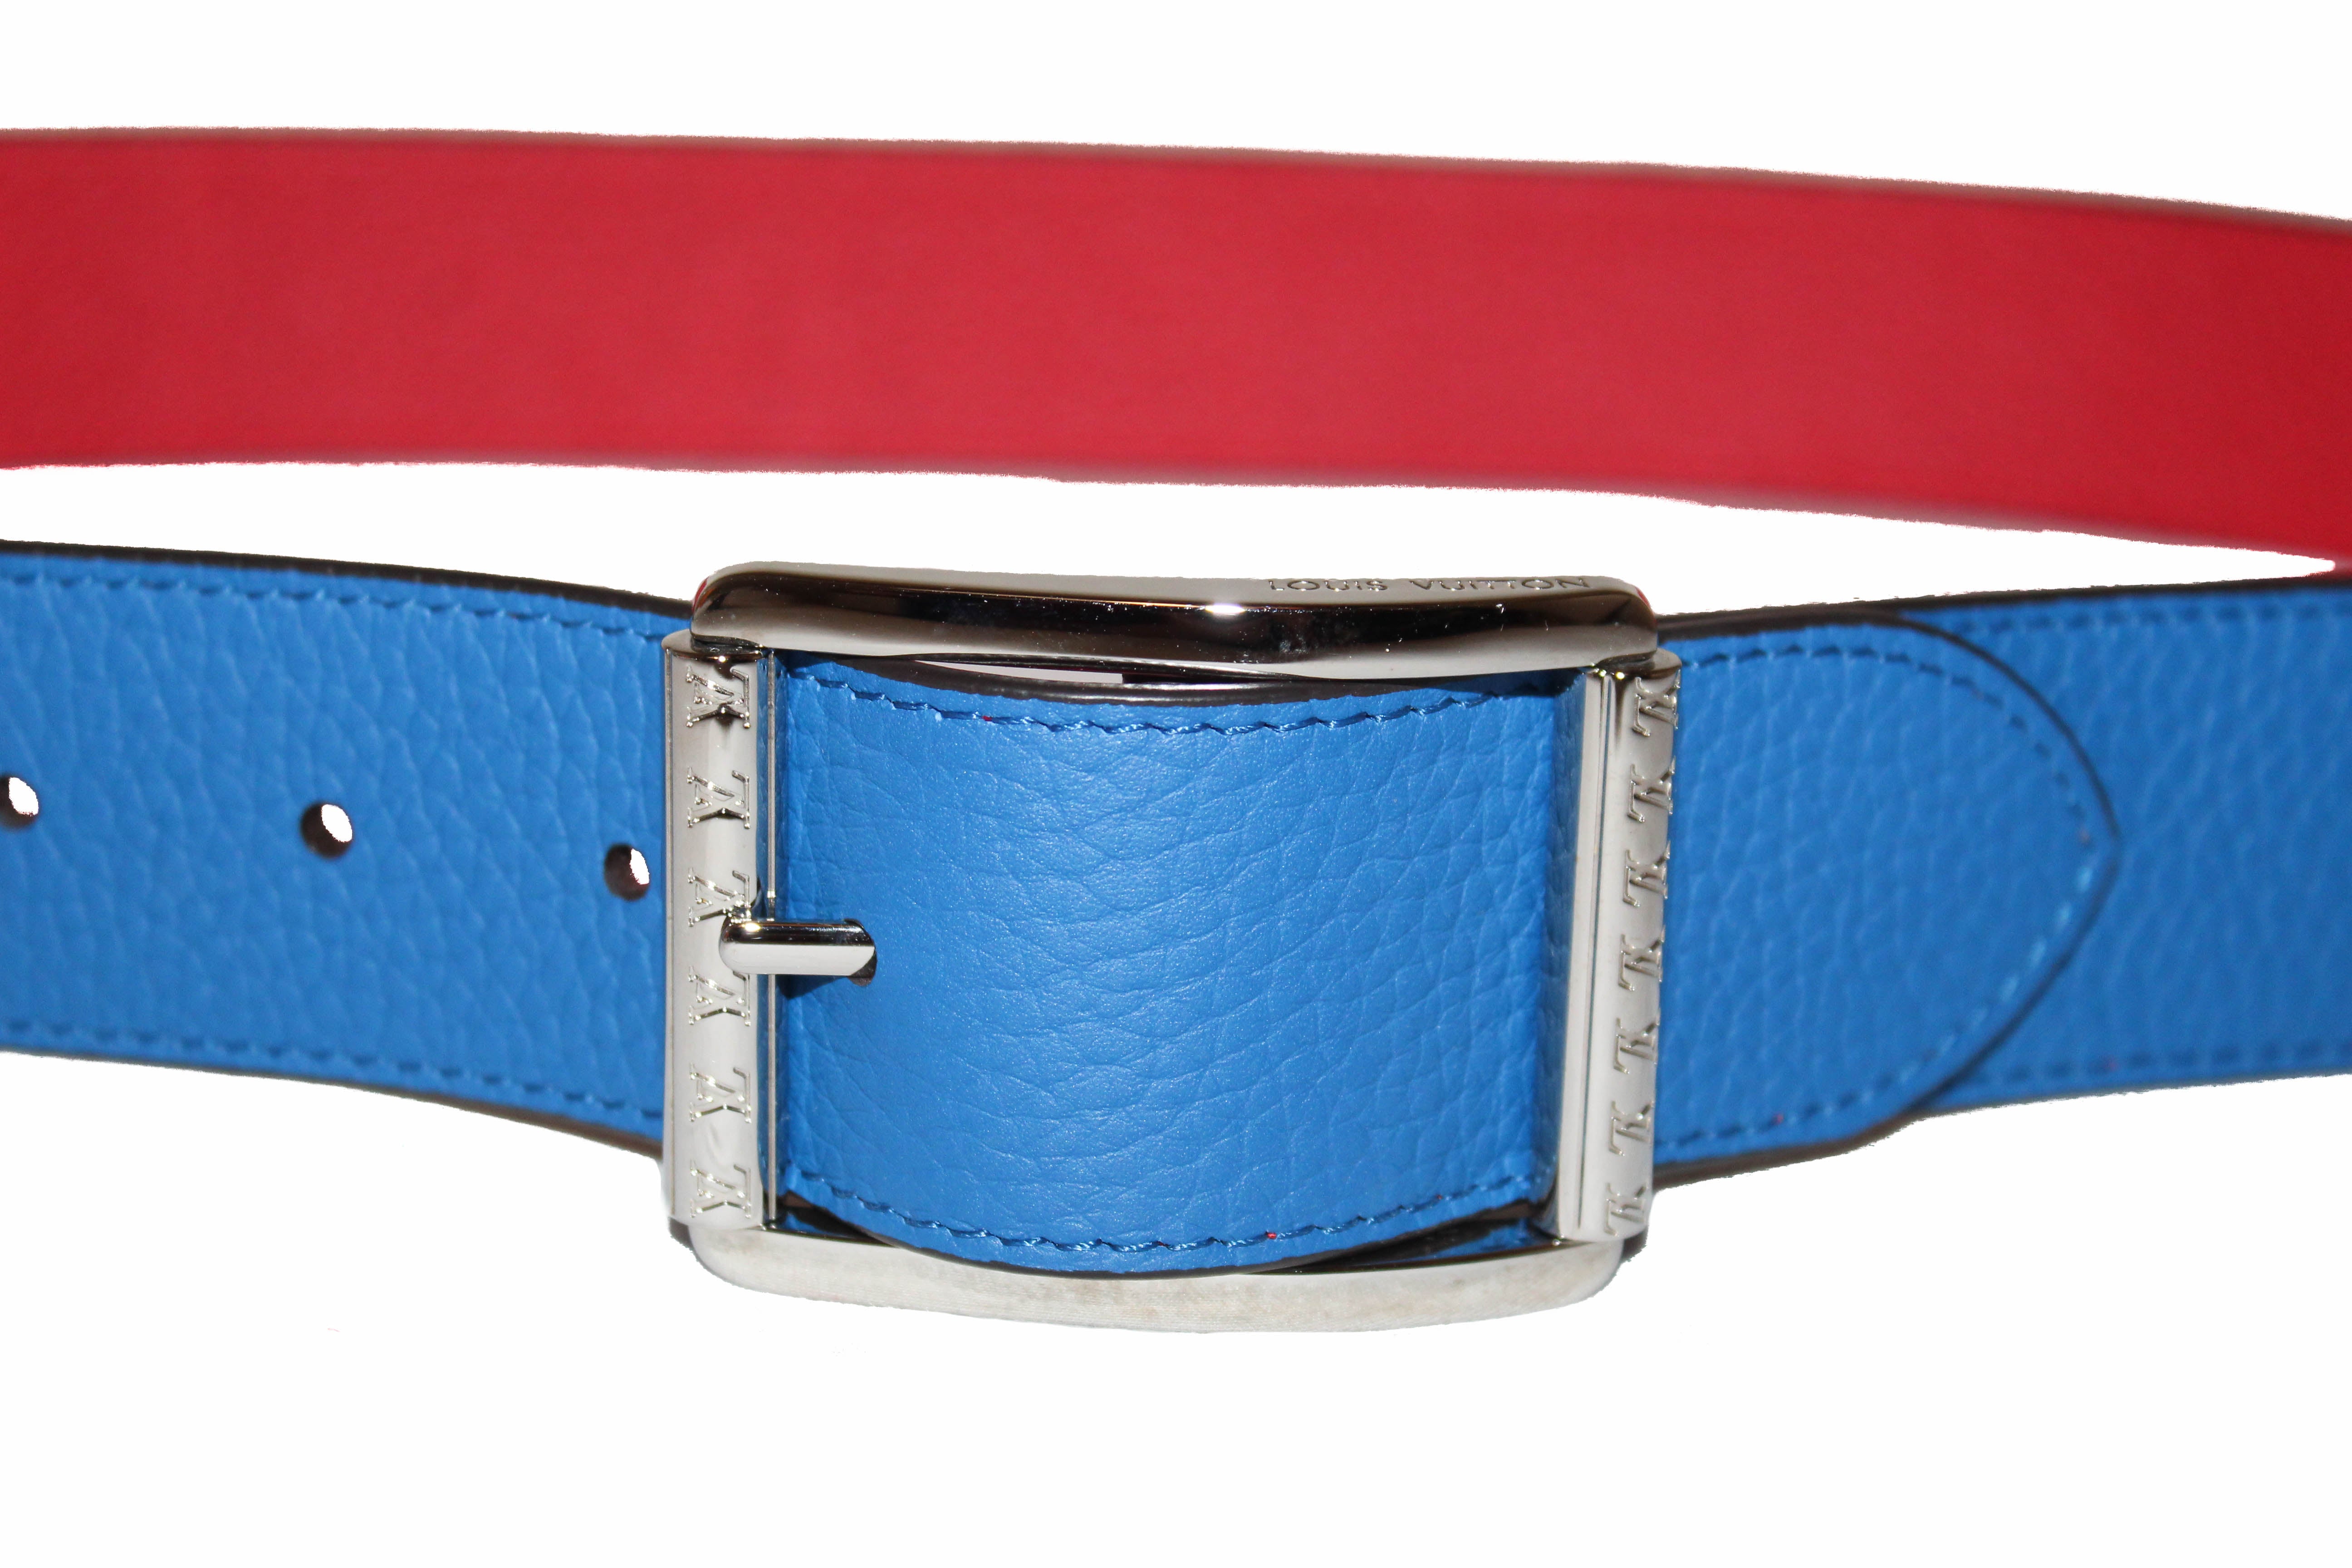 taurillon leather belt